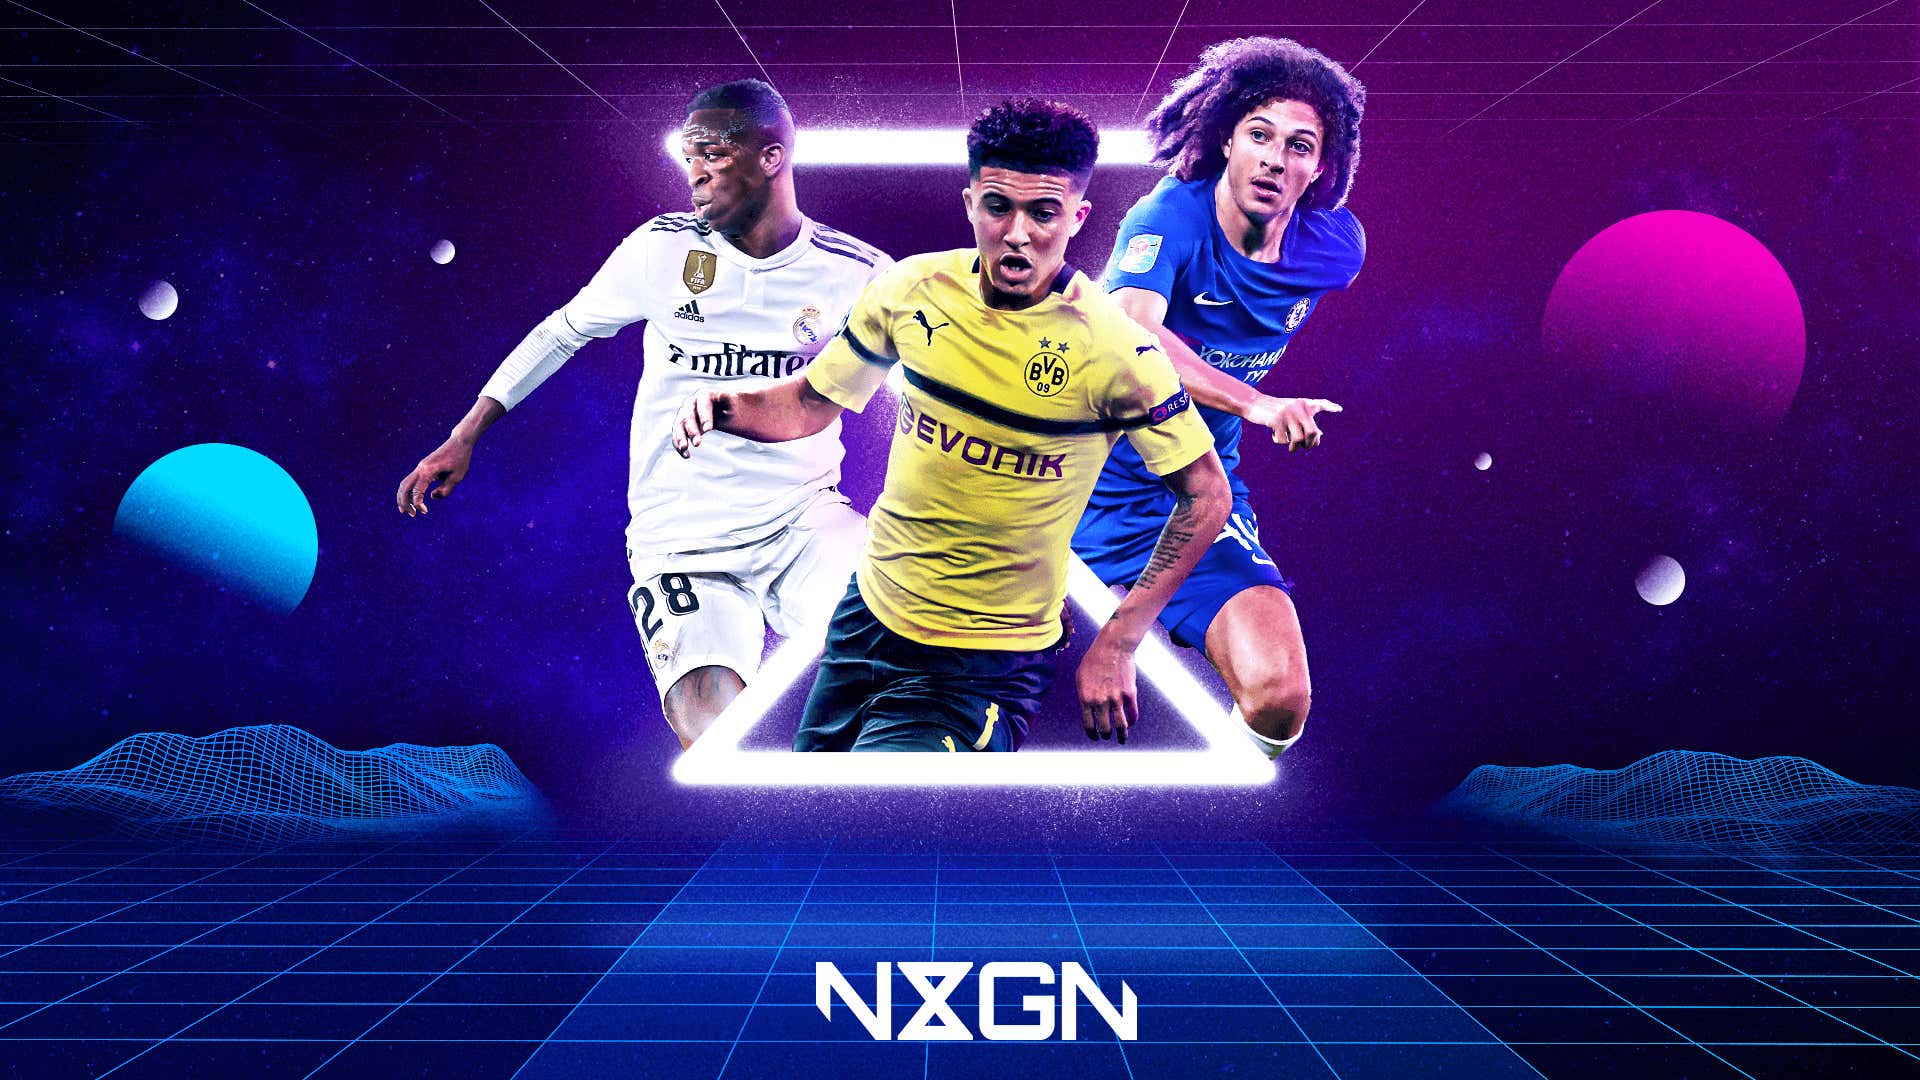 NxGn 2019 promotion